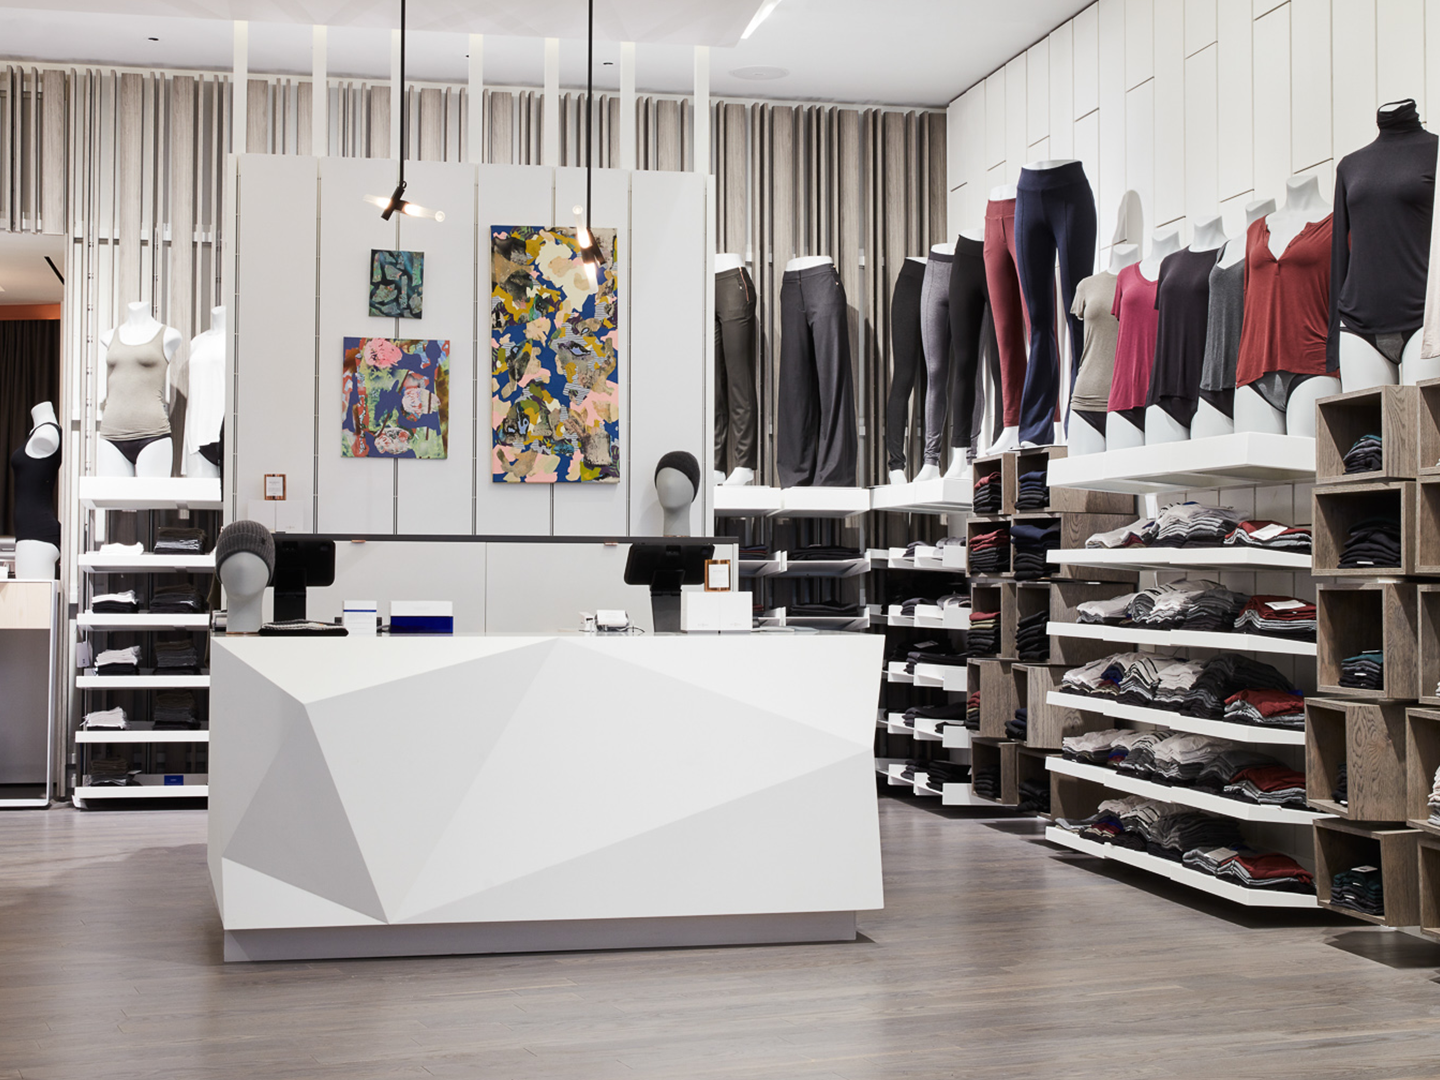 Kit & Ace Store Design - Custom Retail Fixtures - Wall Shelving - Retail Shelving - Retail Display Shelves